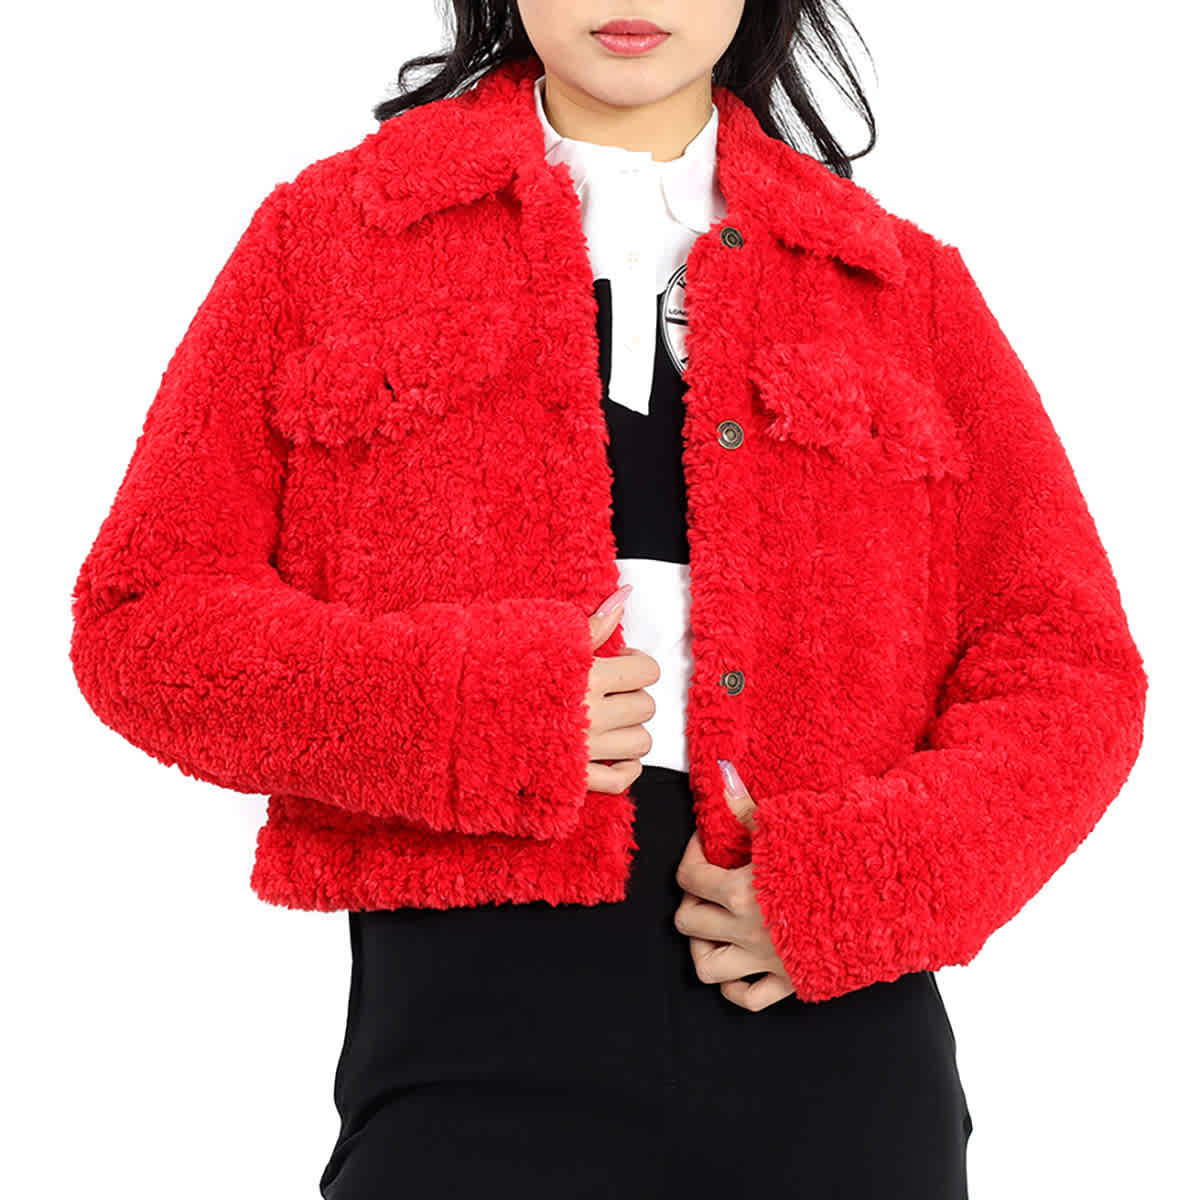 Michael Kors Ladies Faux Sherpa Trucker Jacket In Red, Size Medium - image 1 of 1